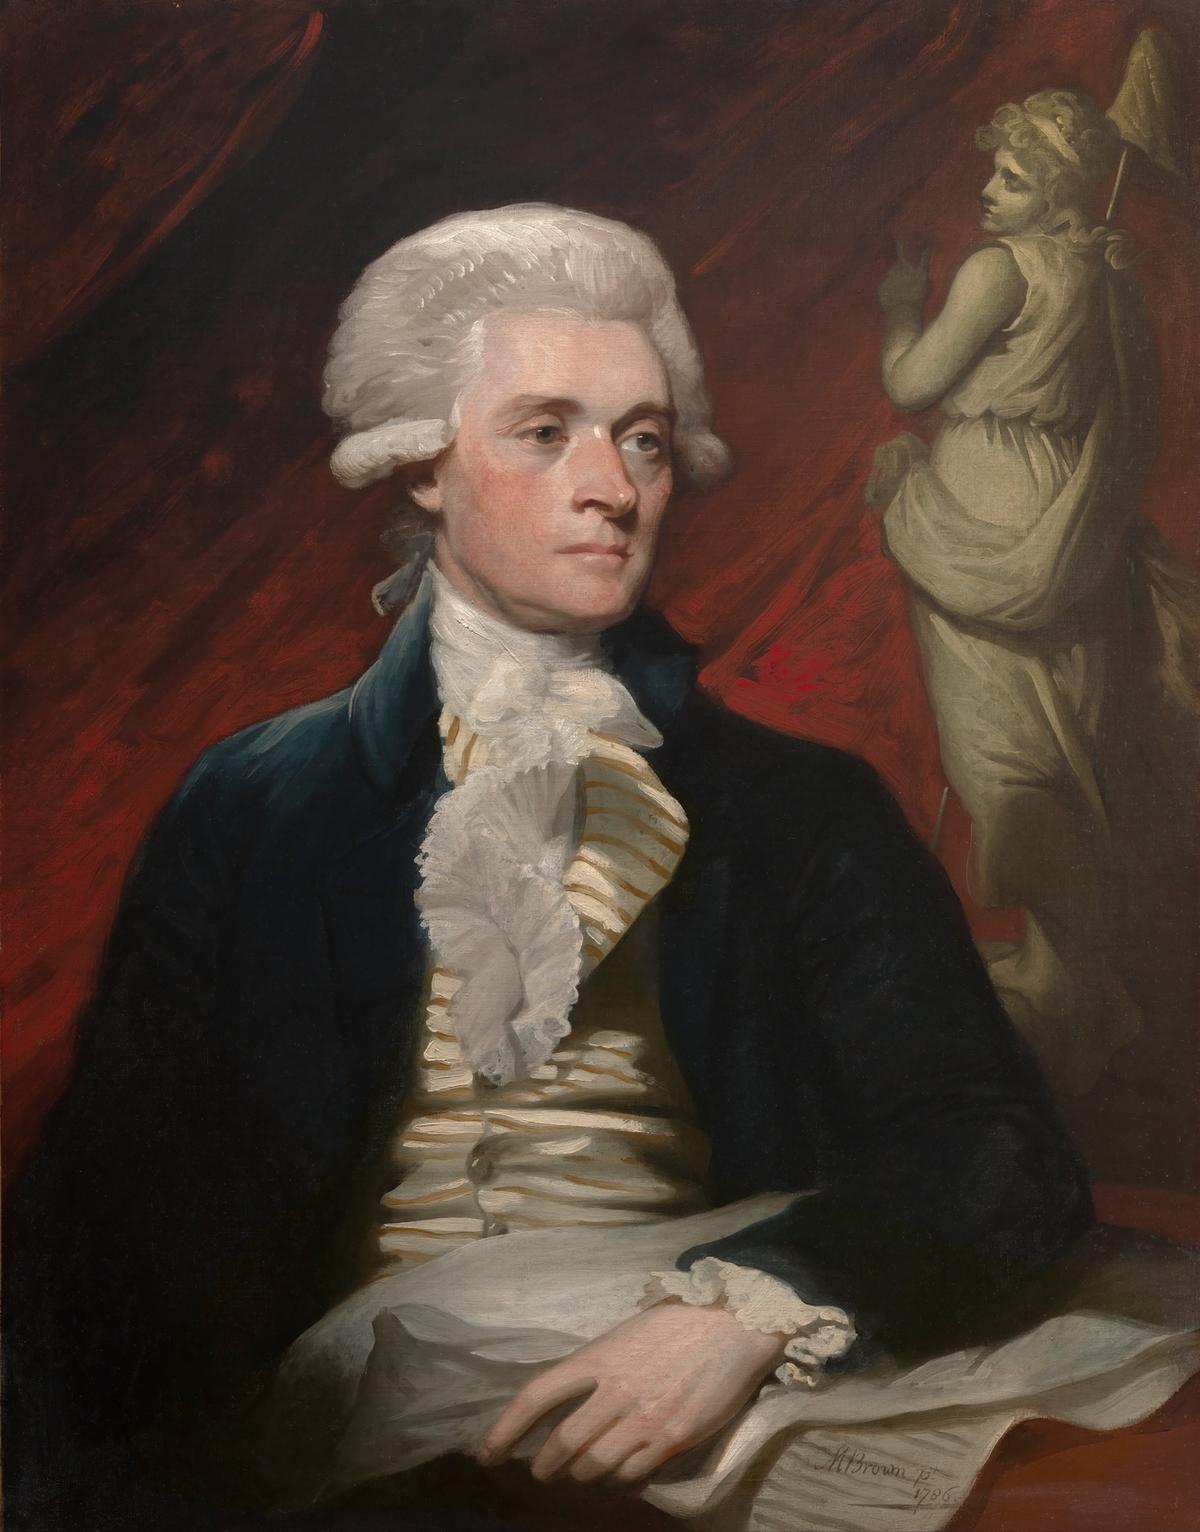  "Thomas Jefferson" by Mather Brown, 1786. Oil on canvas. (National Portrait Gallery, Washington D.C./ Public Domain)